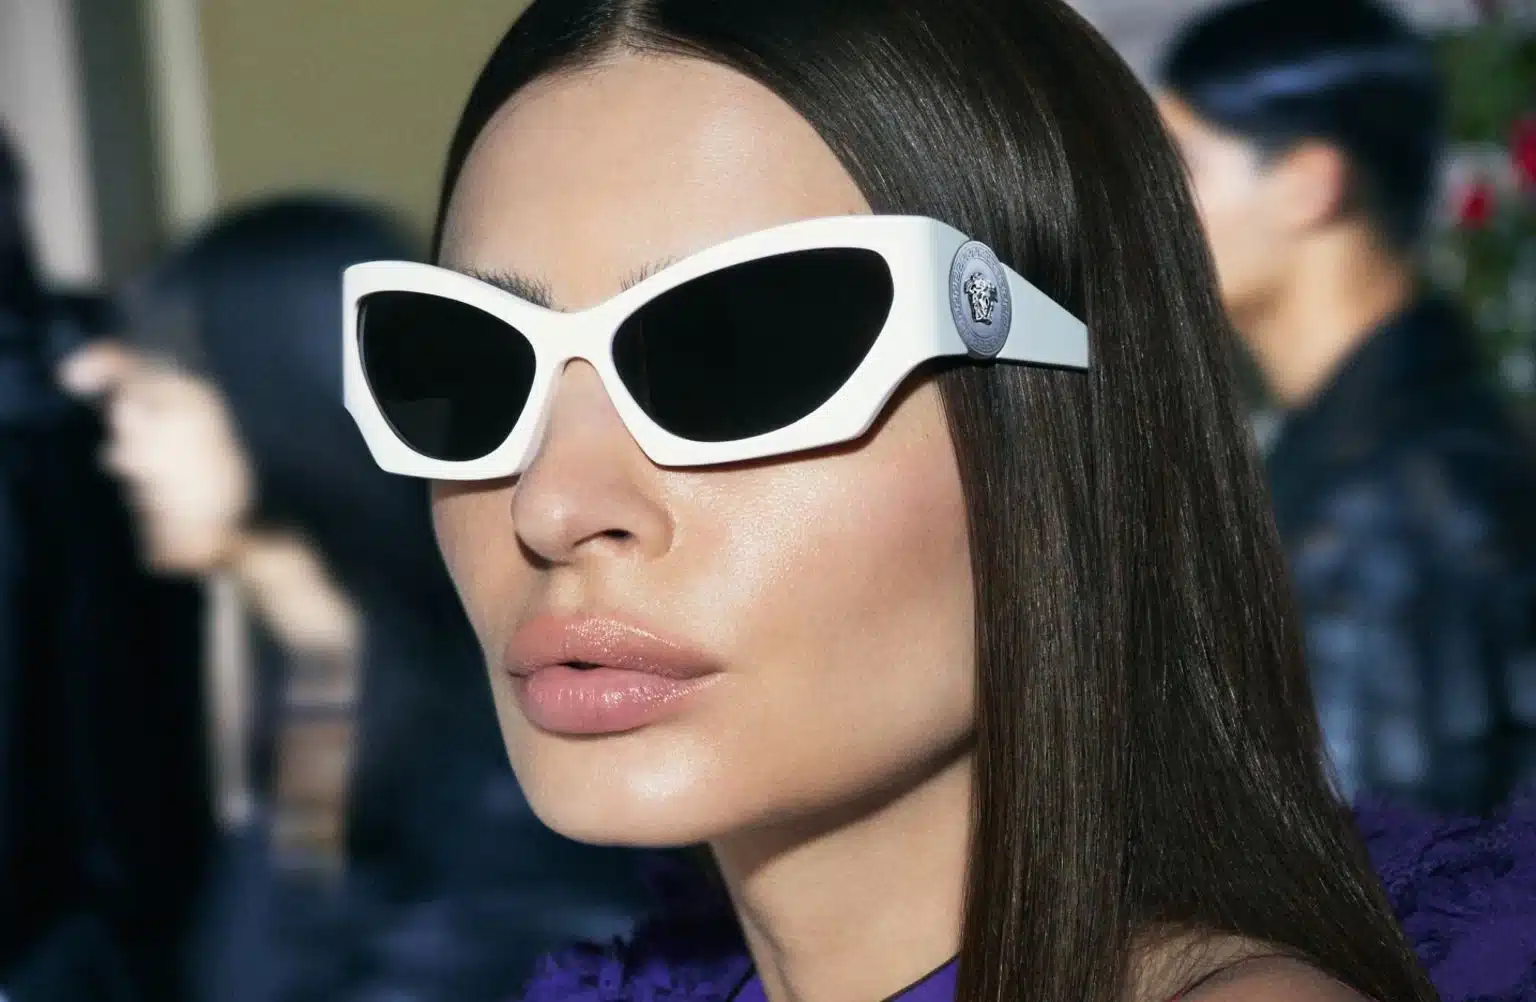 Versace VE4450 Cat Eye Sunglasses